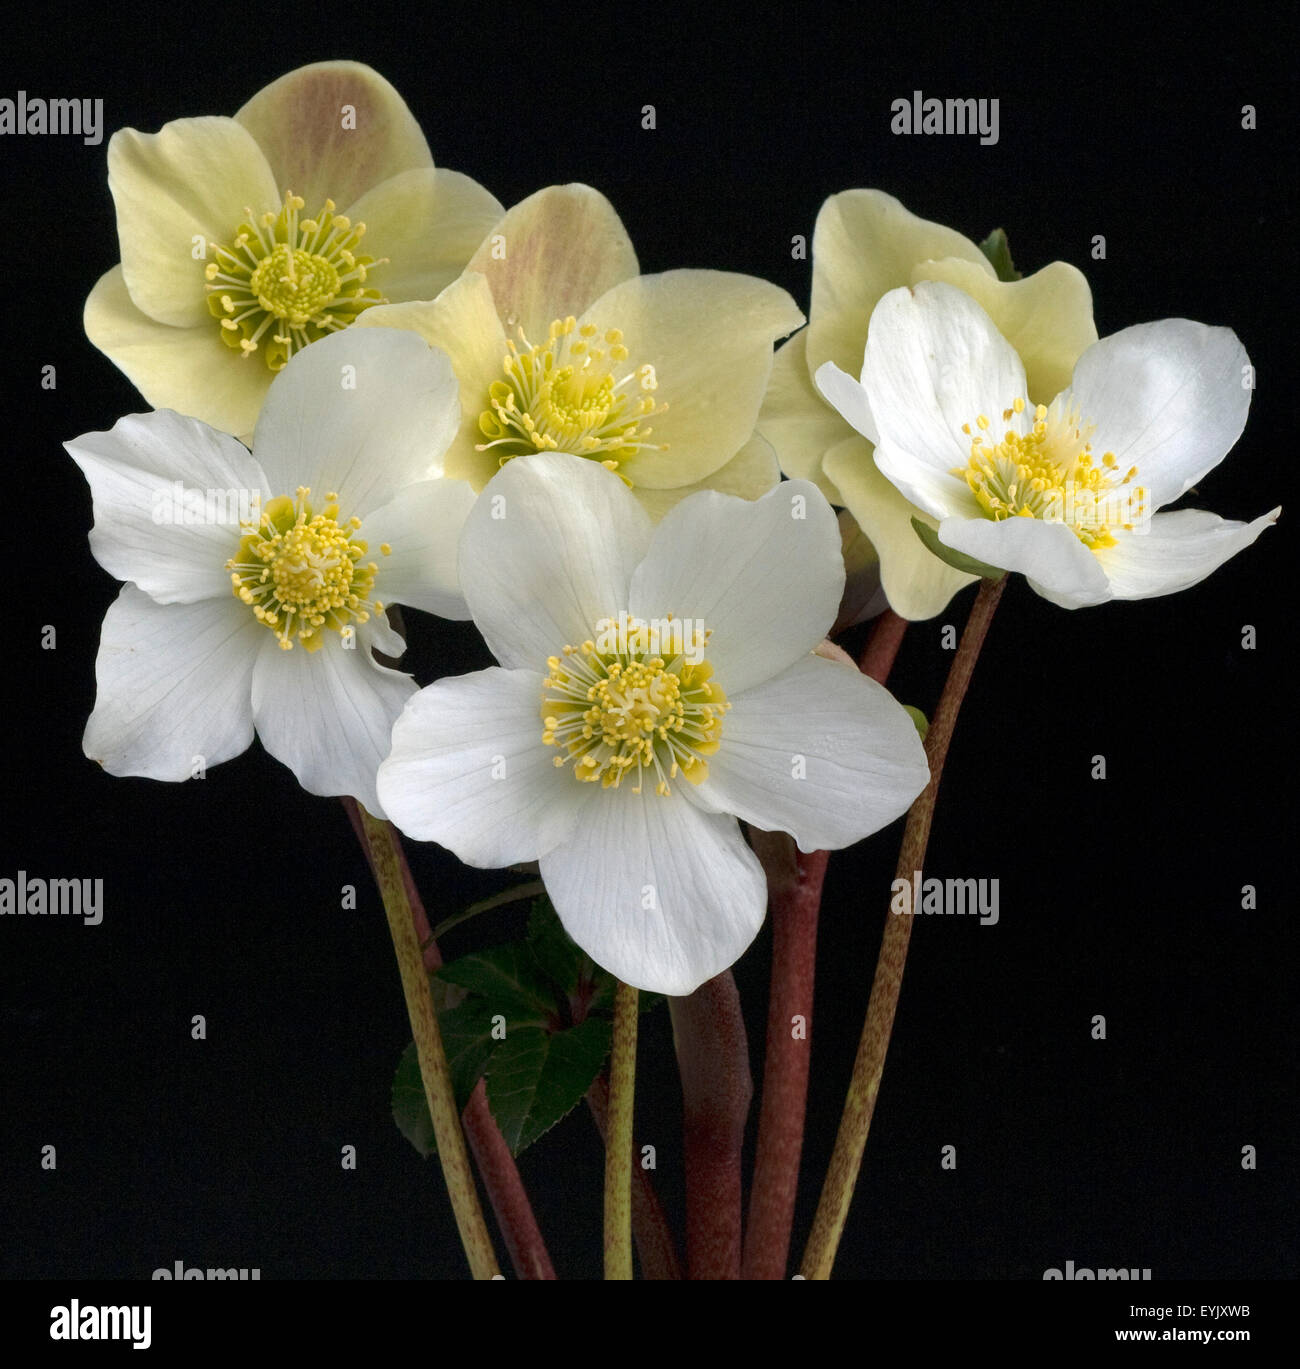 Christrose, Helleborus, niger, Cinnamon, Snow, Gartenpflanze, Stock Photo